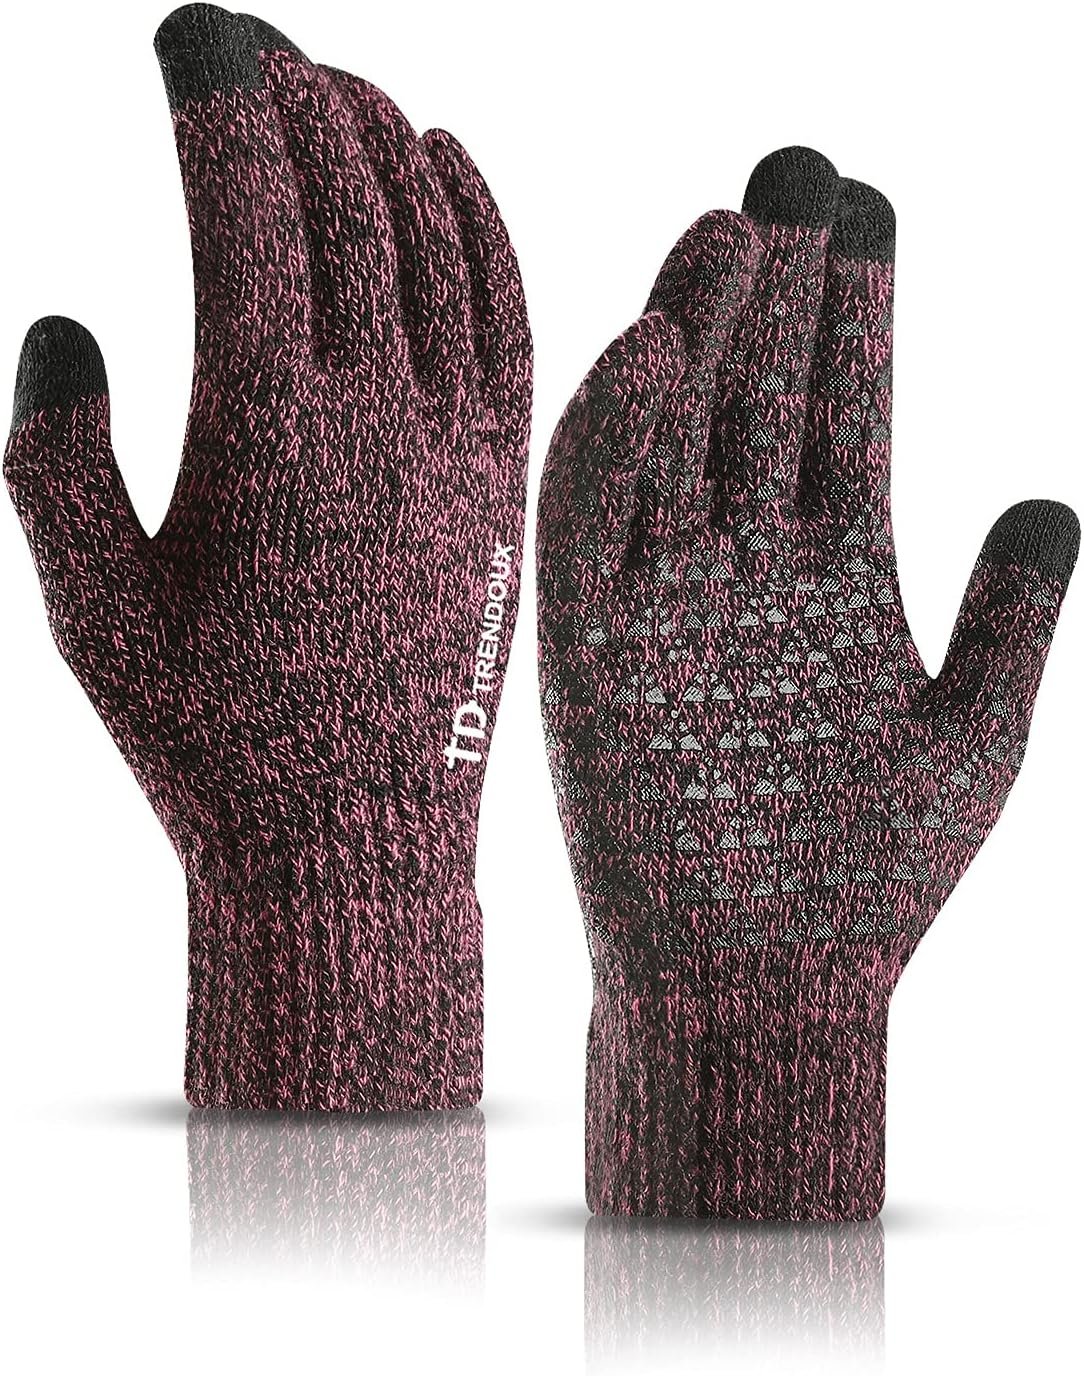 TRENDOUX Winter Gloves Review